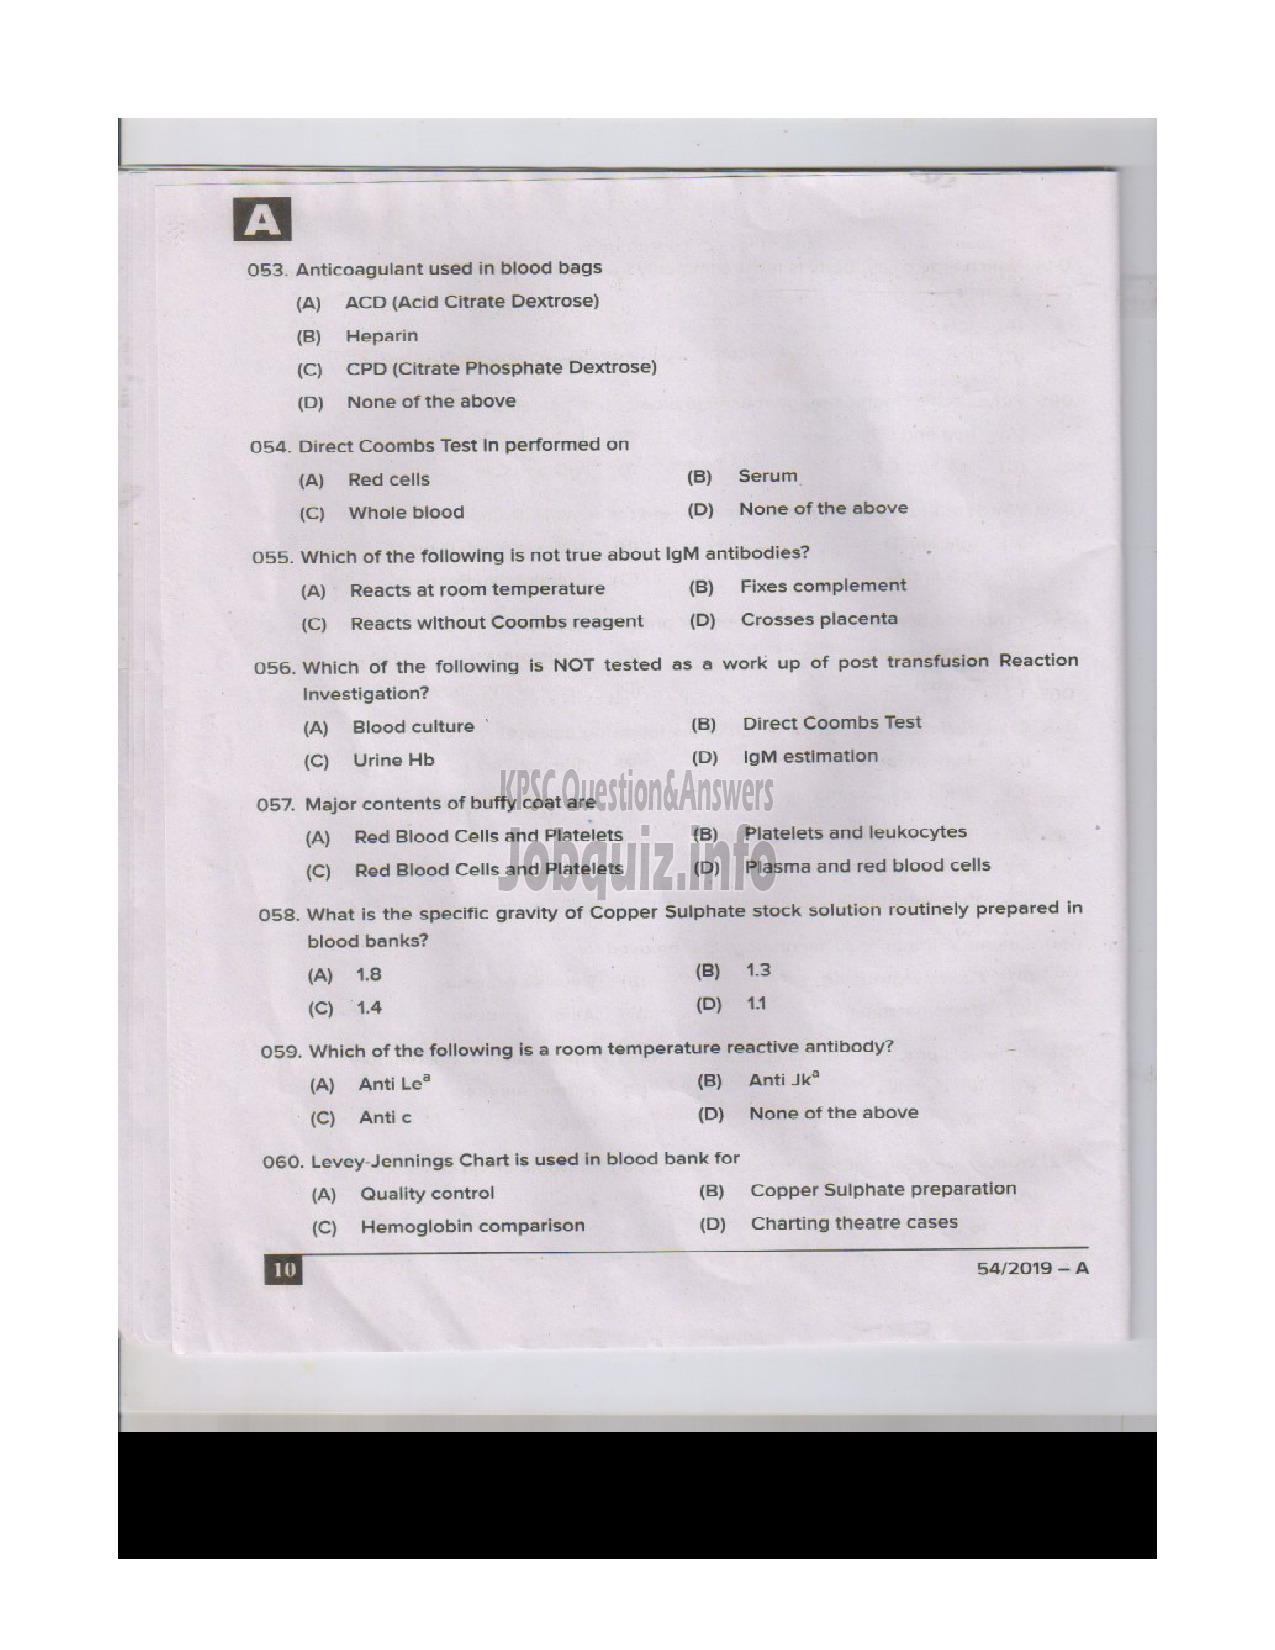 Kerala PSC Question Paper - BLOOD BANK TECHNICIAN HEALTH SERVICES ENGLISH -10